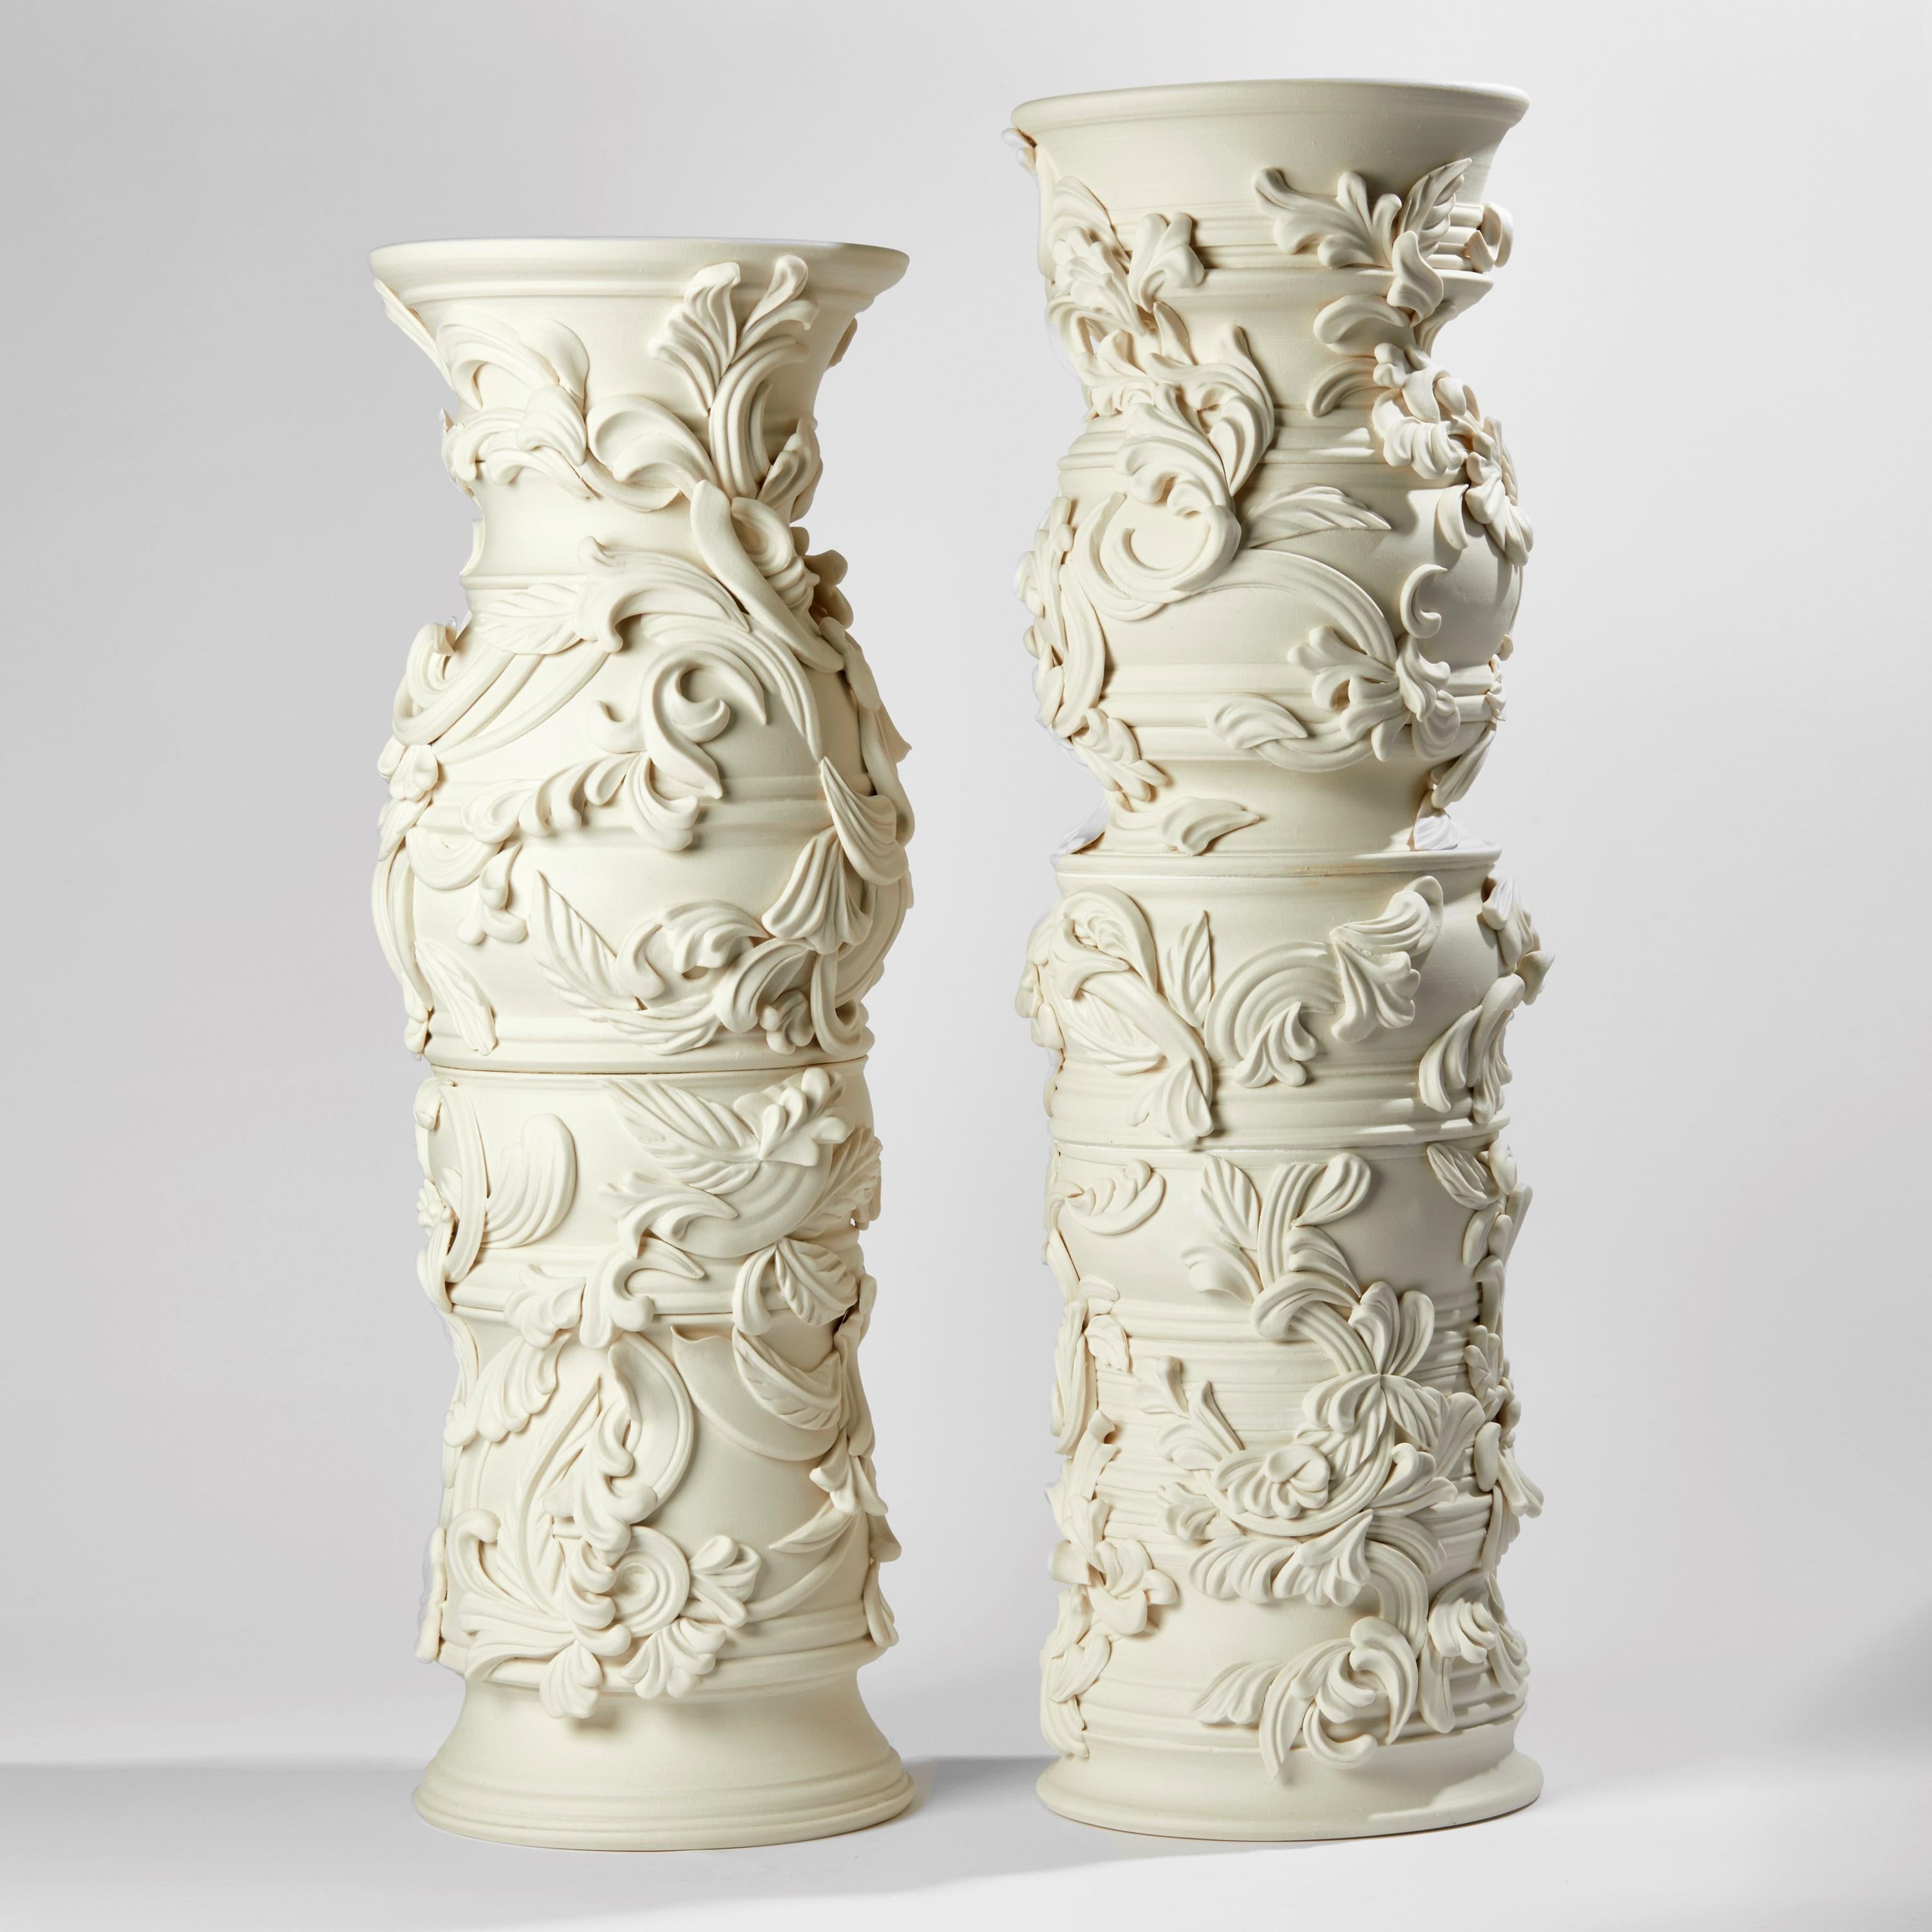 Promenade II, a Unique Ceramic Sculptural Tall Vase in Porcelain by Jo Taylor 2